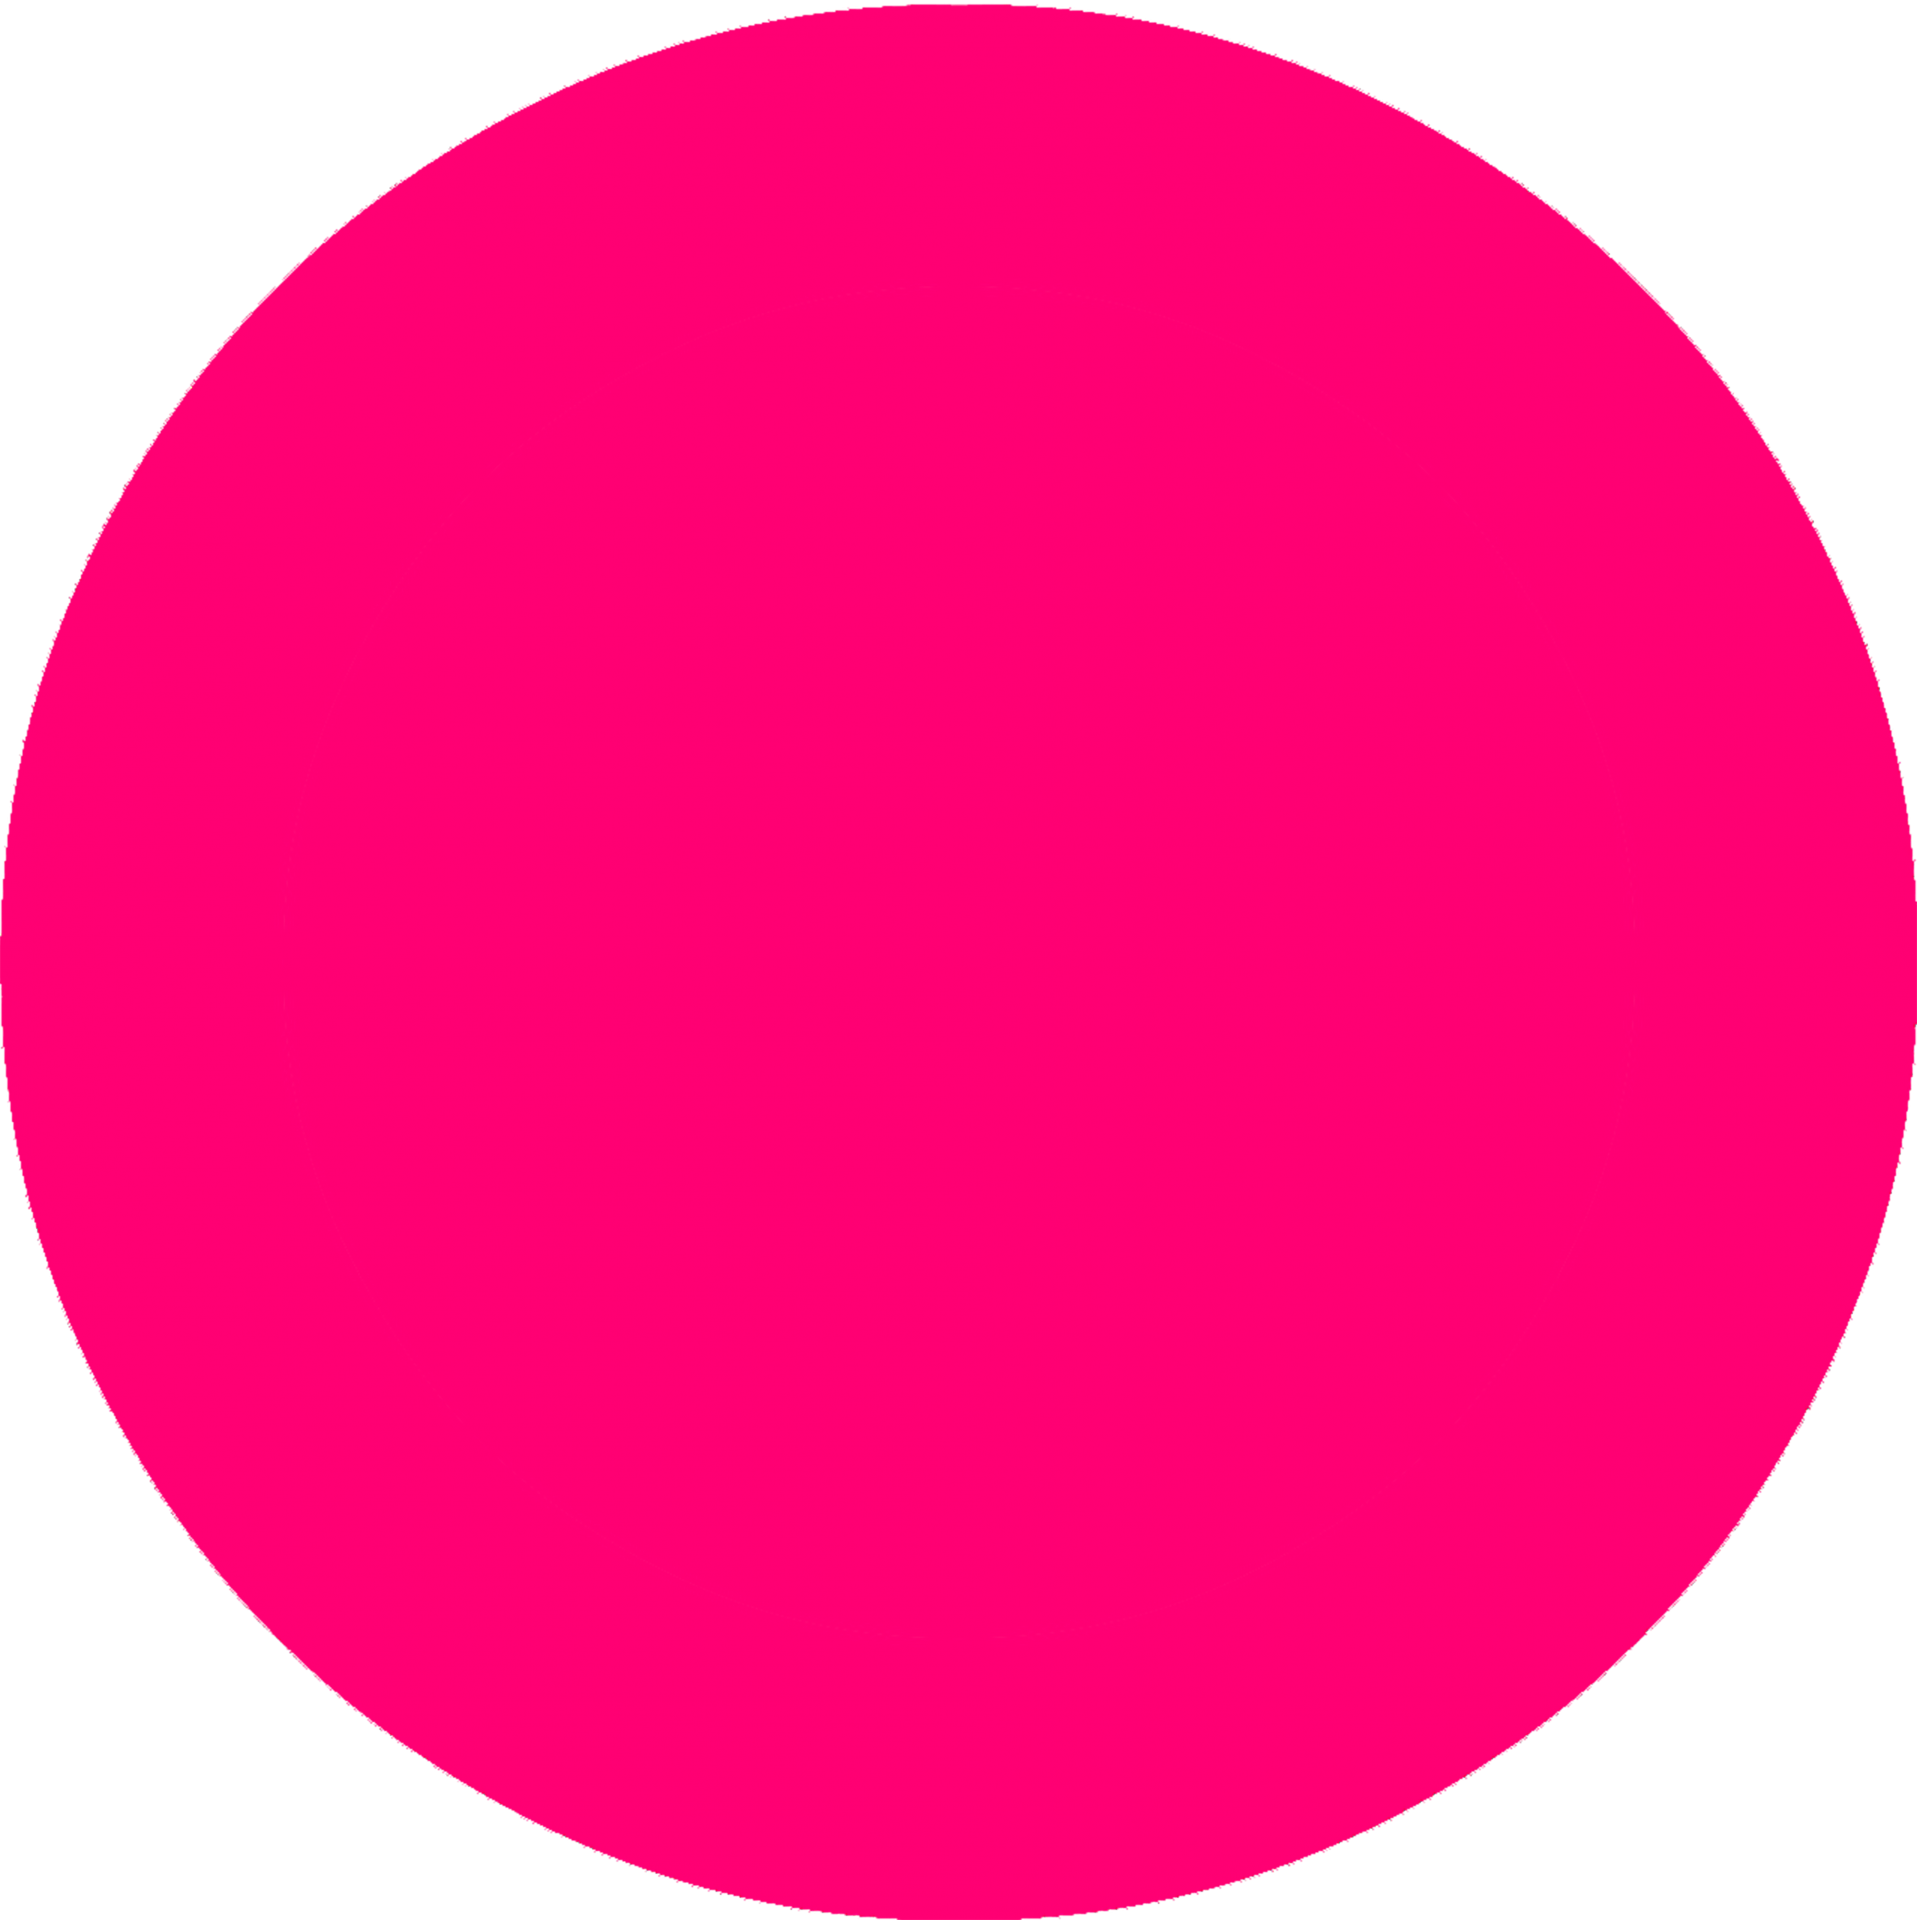 Cercul roz